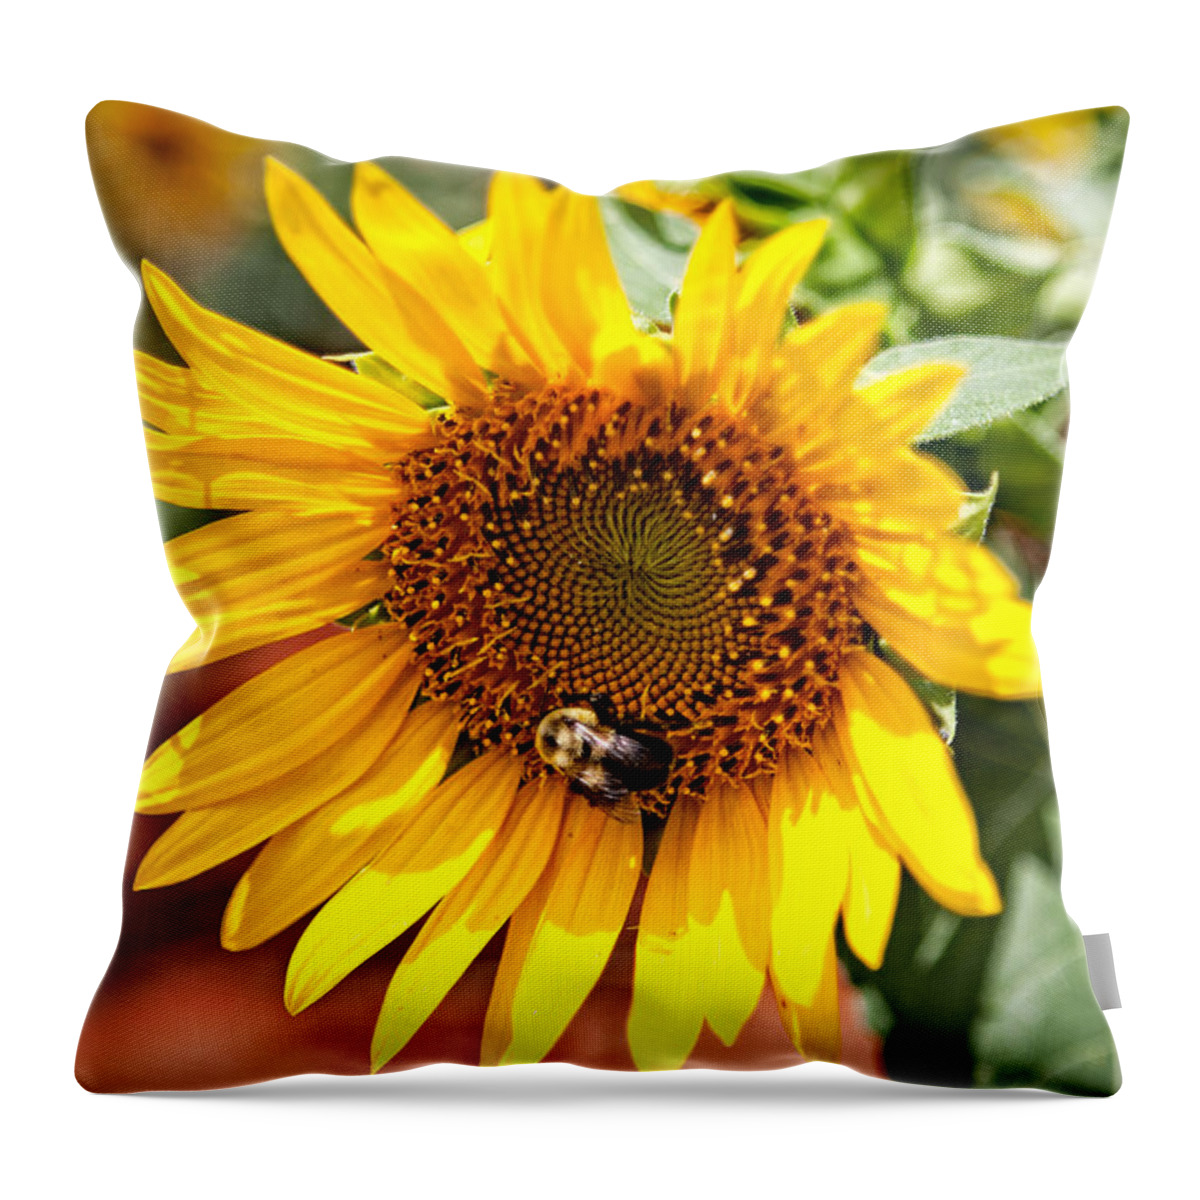 Flower Throw Pillow featuring the photograph Sunflower Love by Gerald Adams